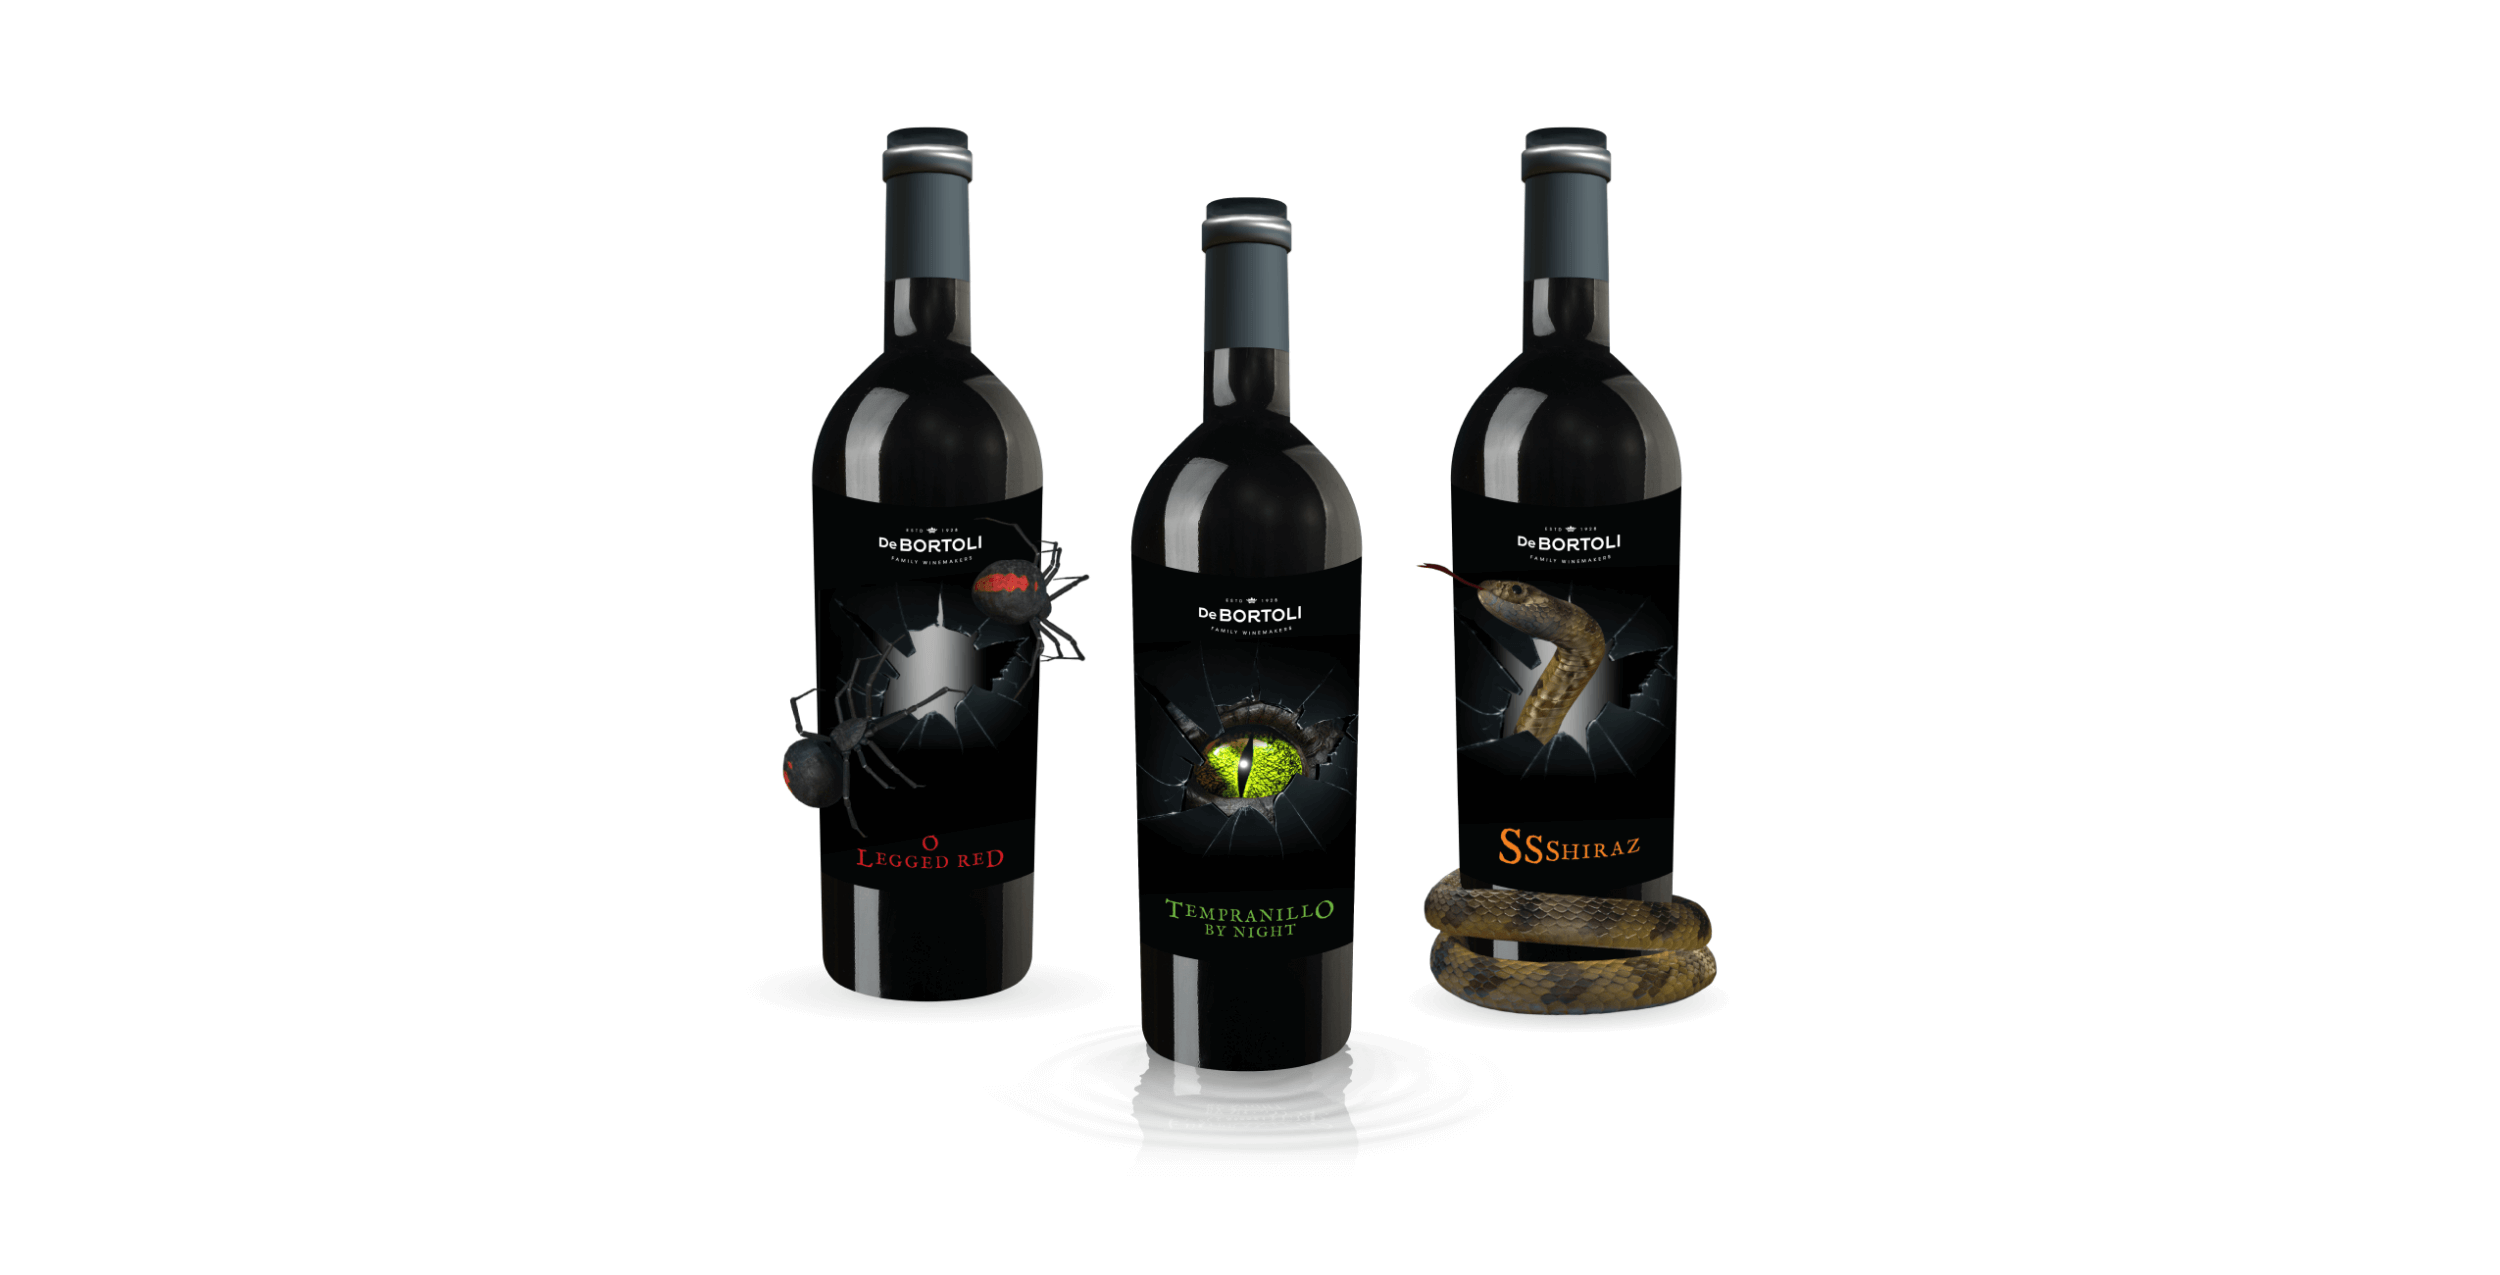 DeBortoli - Hero Image - x3 Wine Bottles - AR - Experience - Creatures - Augmented Reality